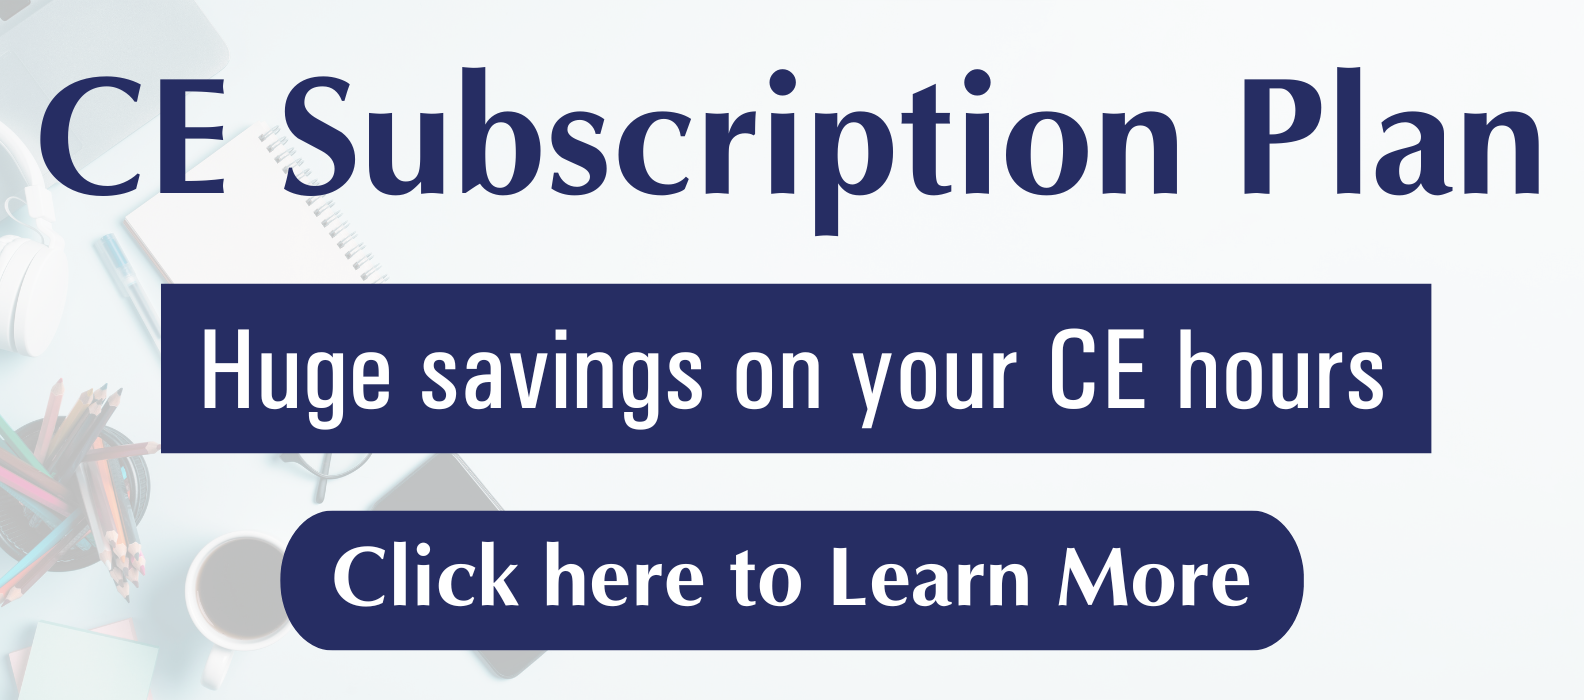 CE Subscription Plan